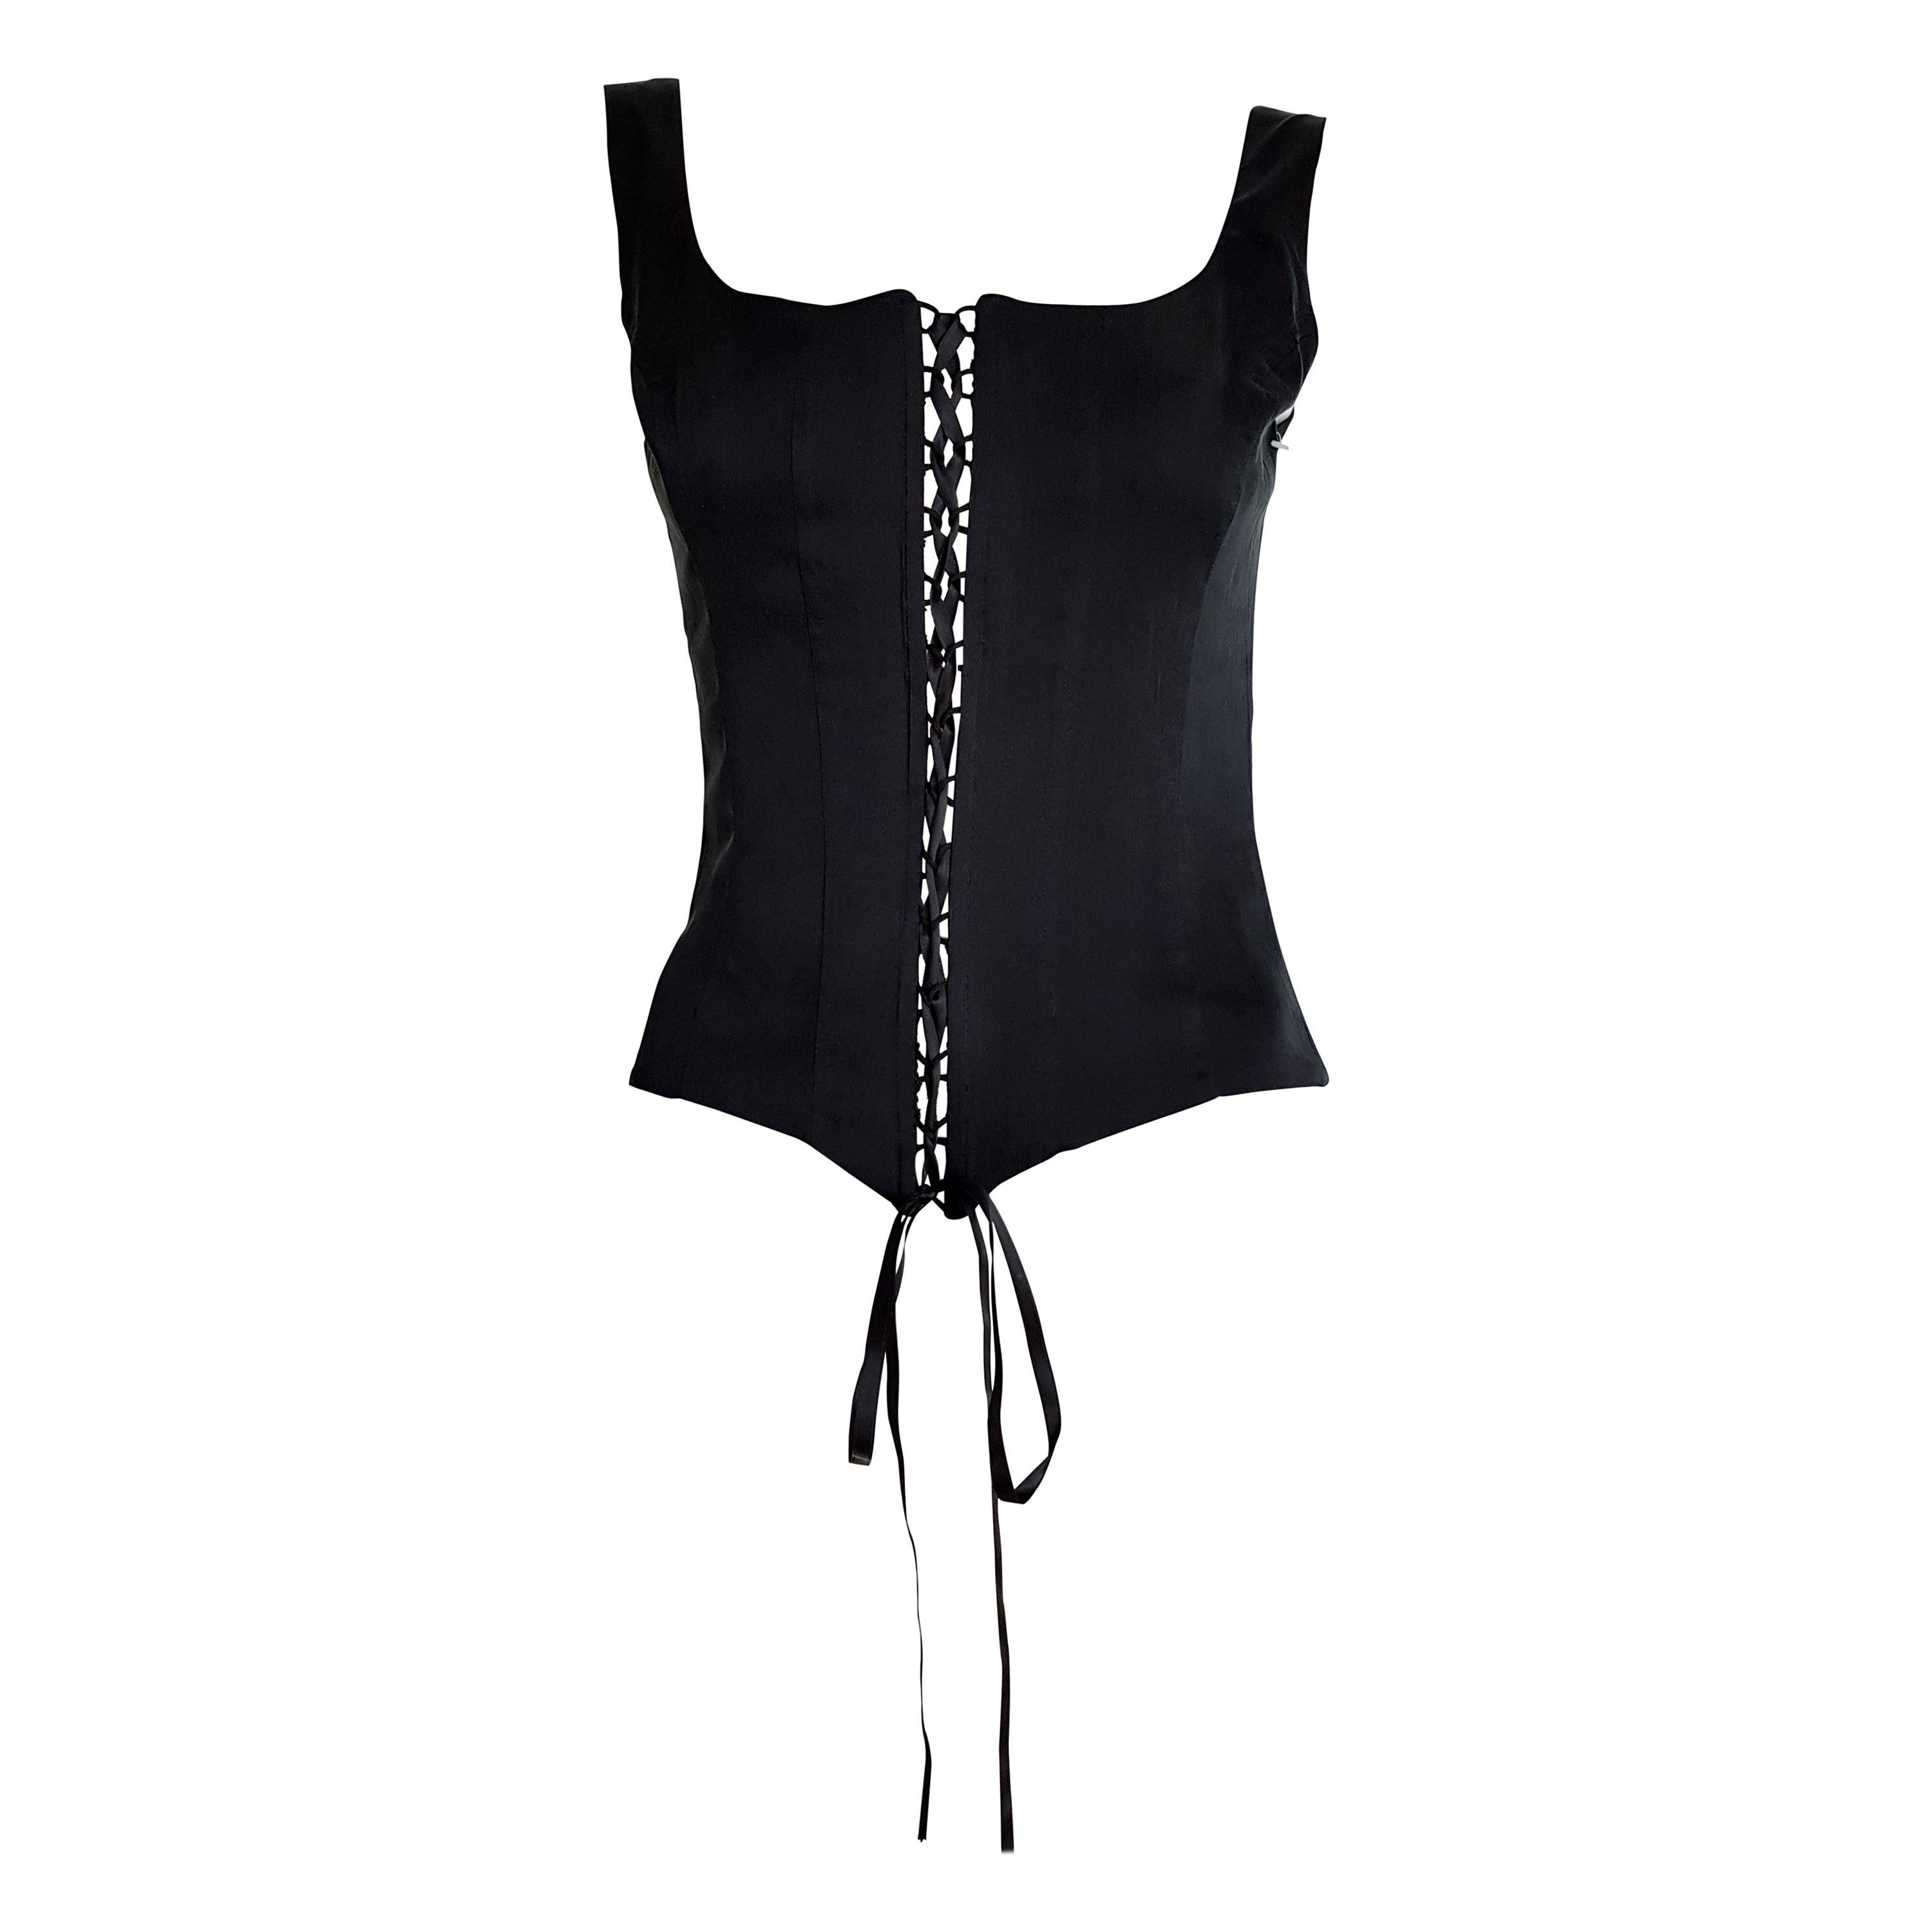 Christian DIOR "New" Haute Couture Double Silk Bustier Top Corset - Unworn For Sale